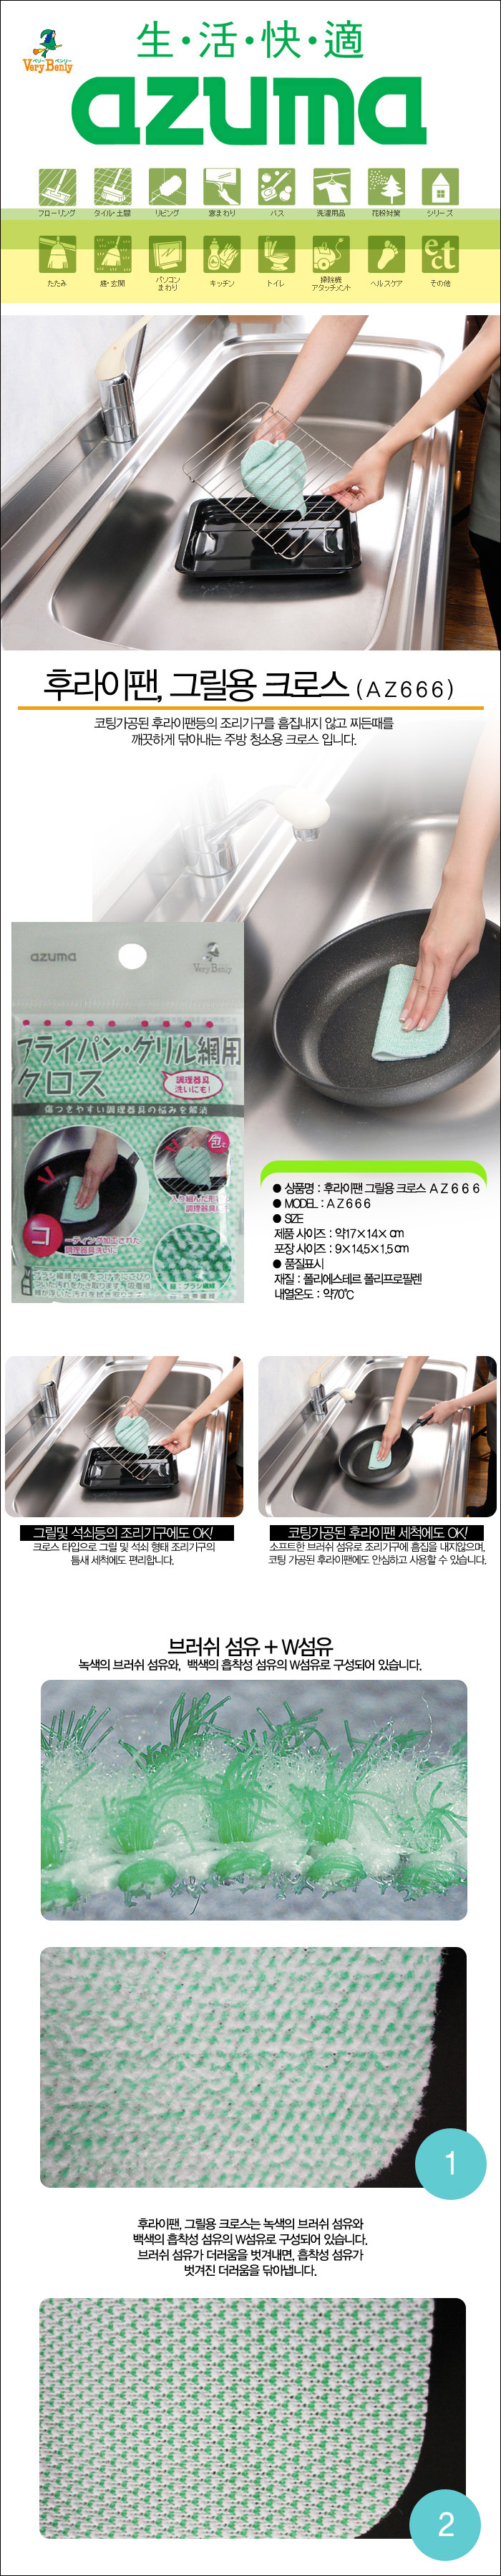 AZUMA/Washer/frying fan/grill/AZ666/Kitchen